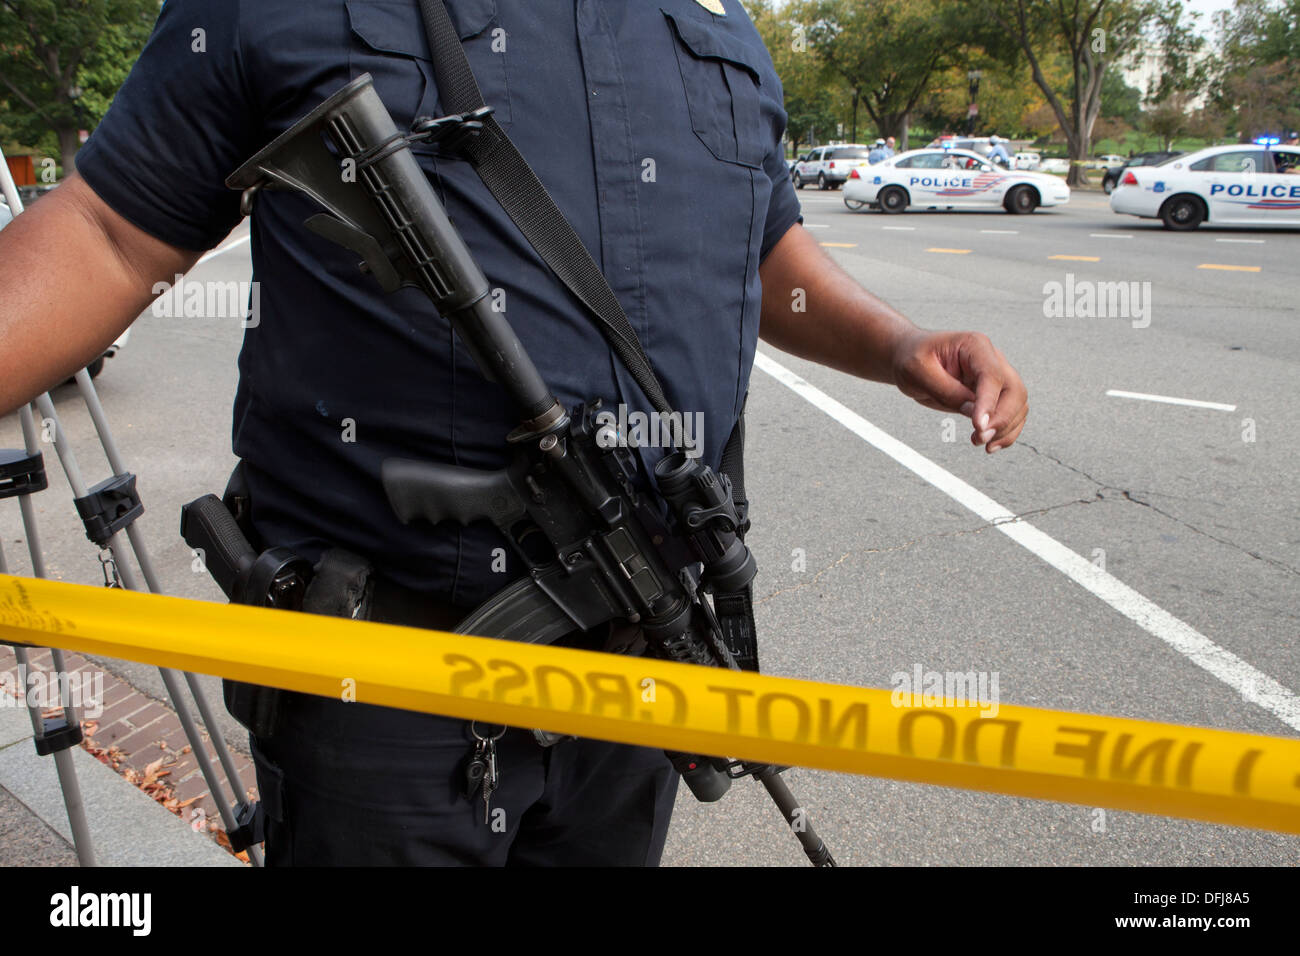 Policeman carrying a semi-auto rifle putting up police line tape at a crime scene - Washington, DC USA Stock Photo